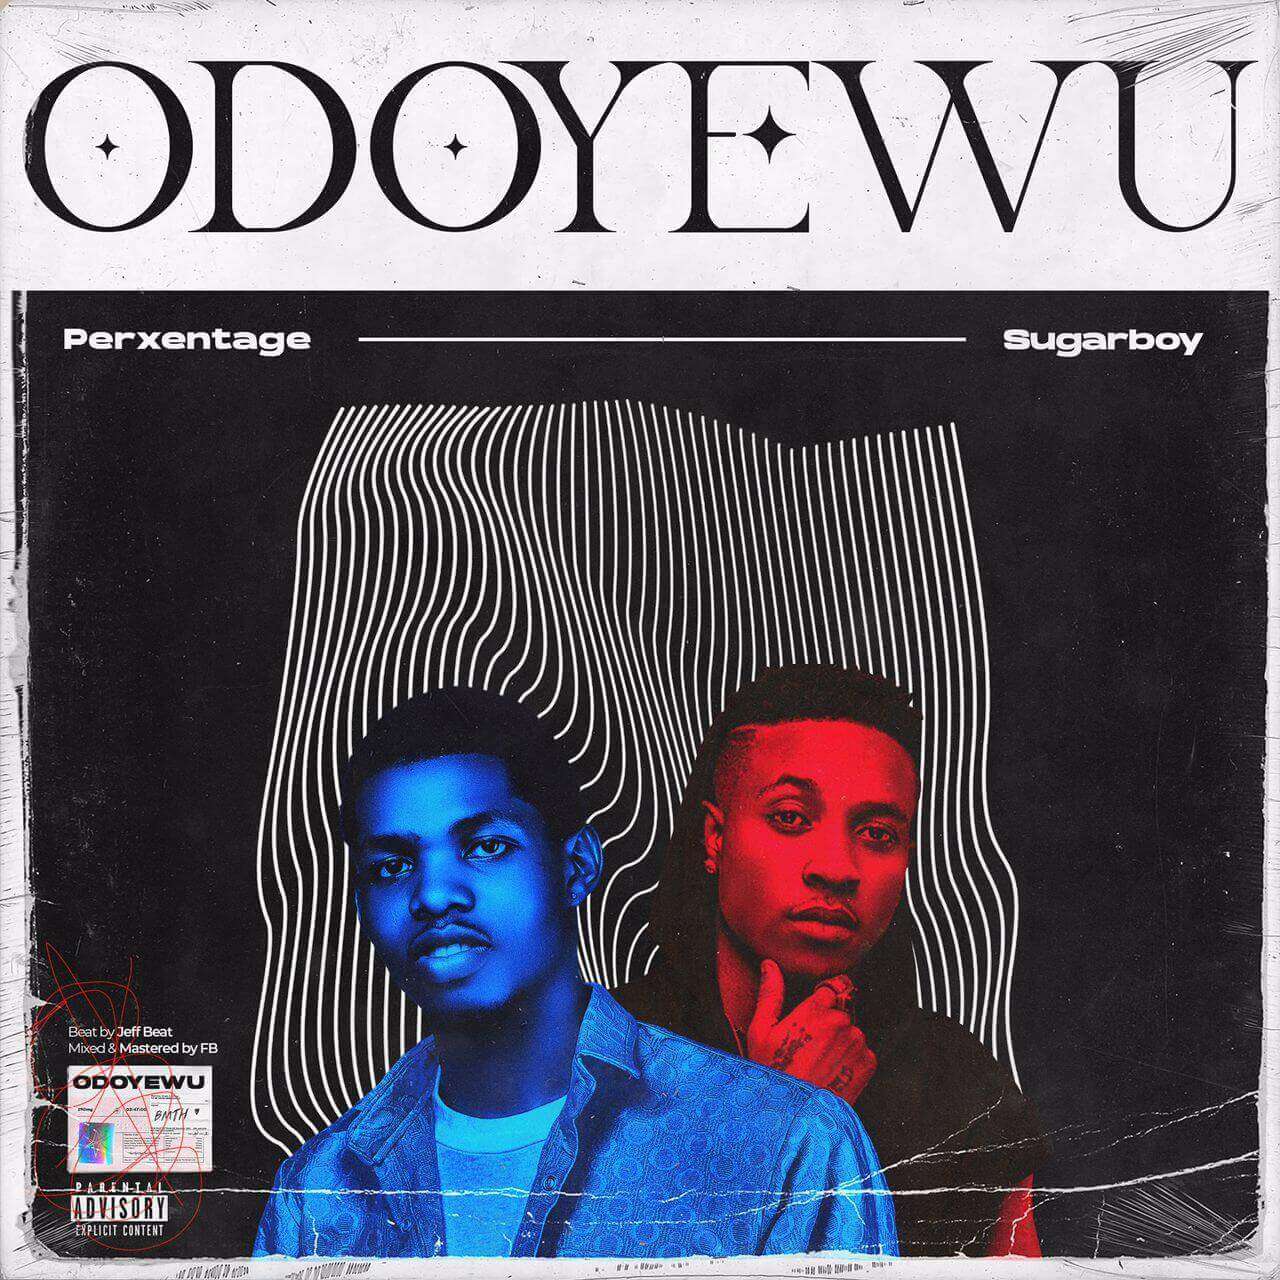 New Music: Odoyewu by Perxentage Ft. Sugarboy